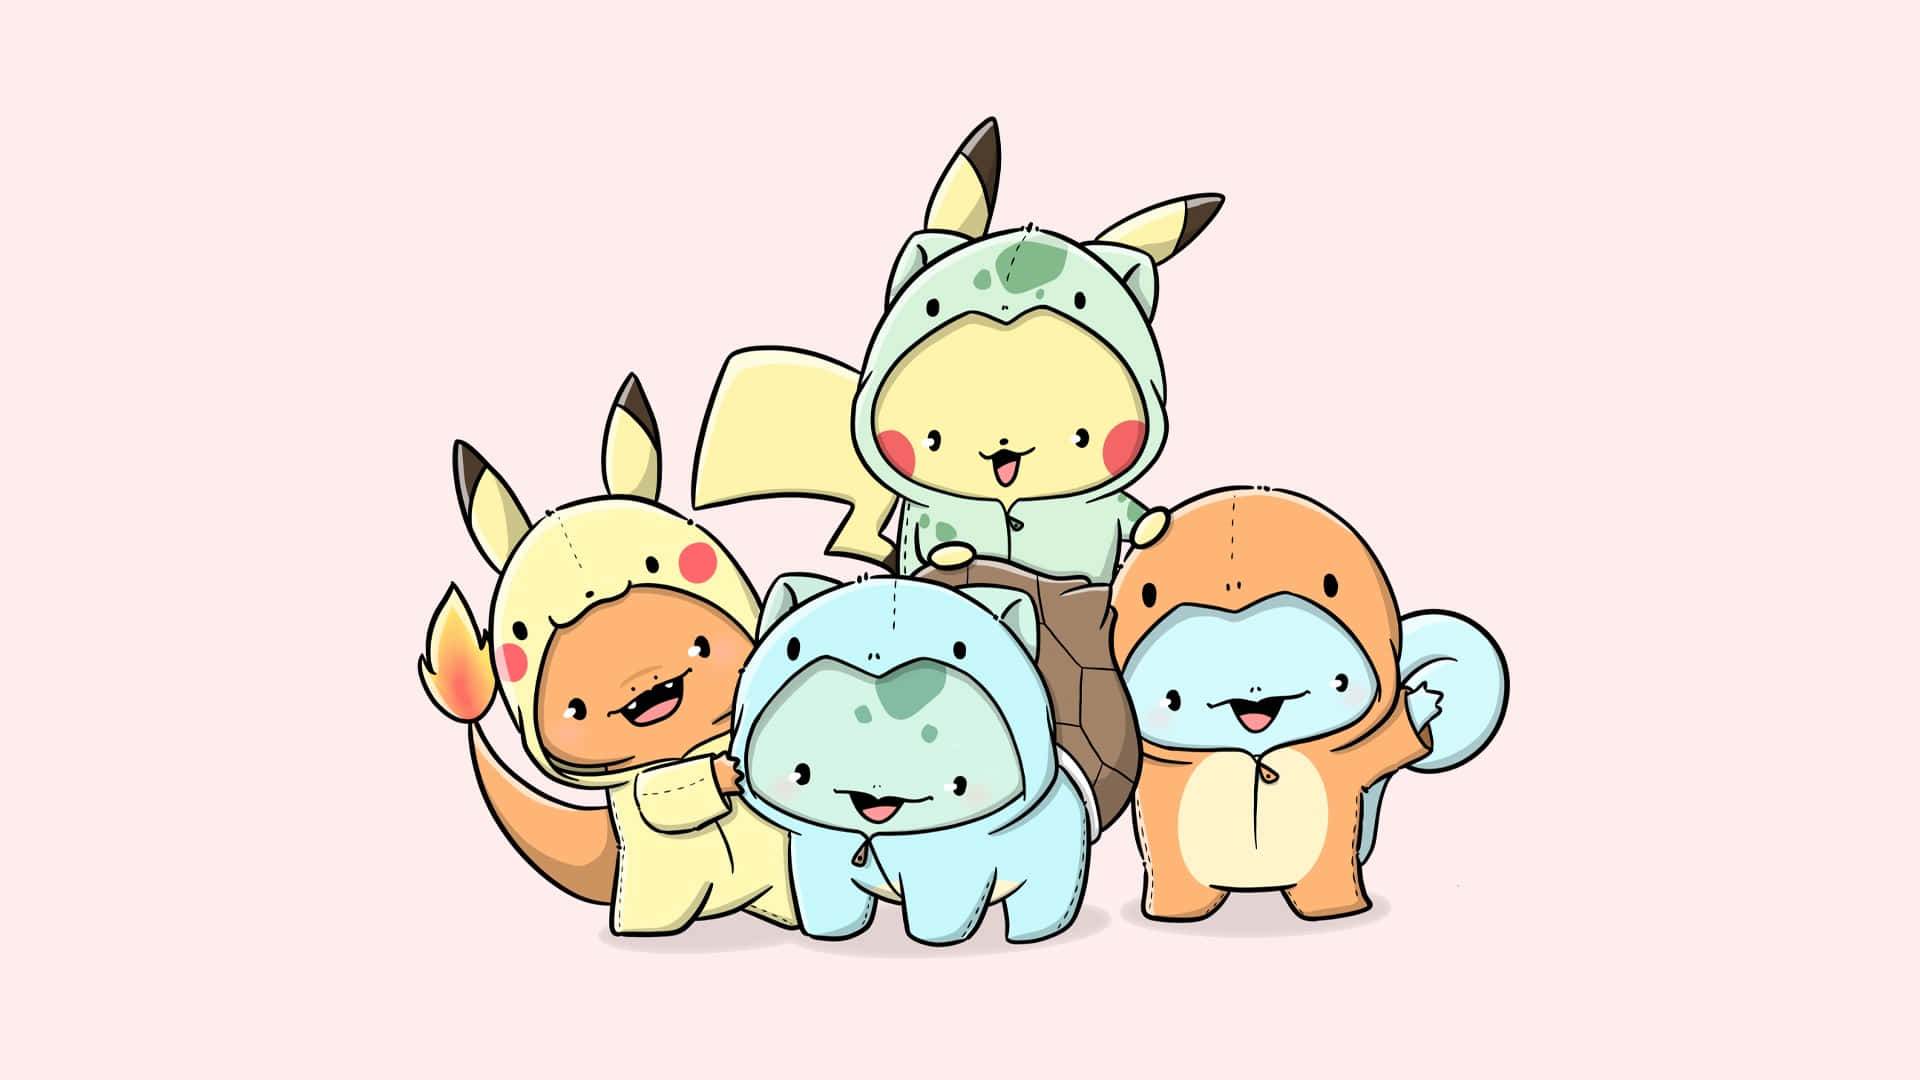 Adorable Pokemon Friends Illustration Wallpaper